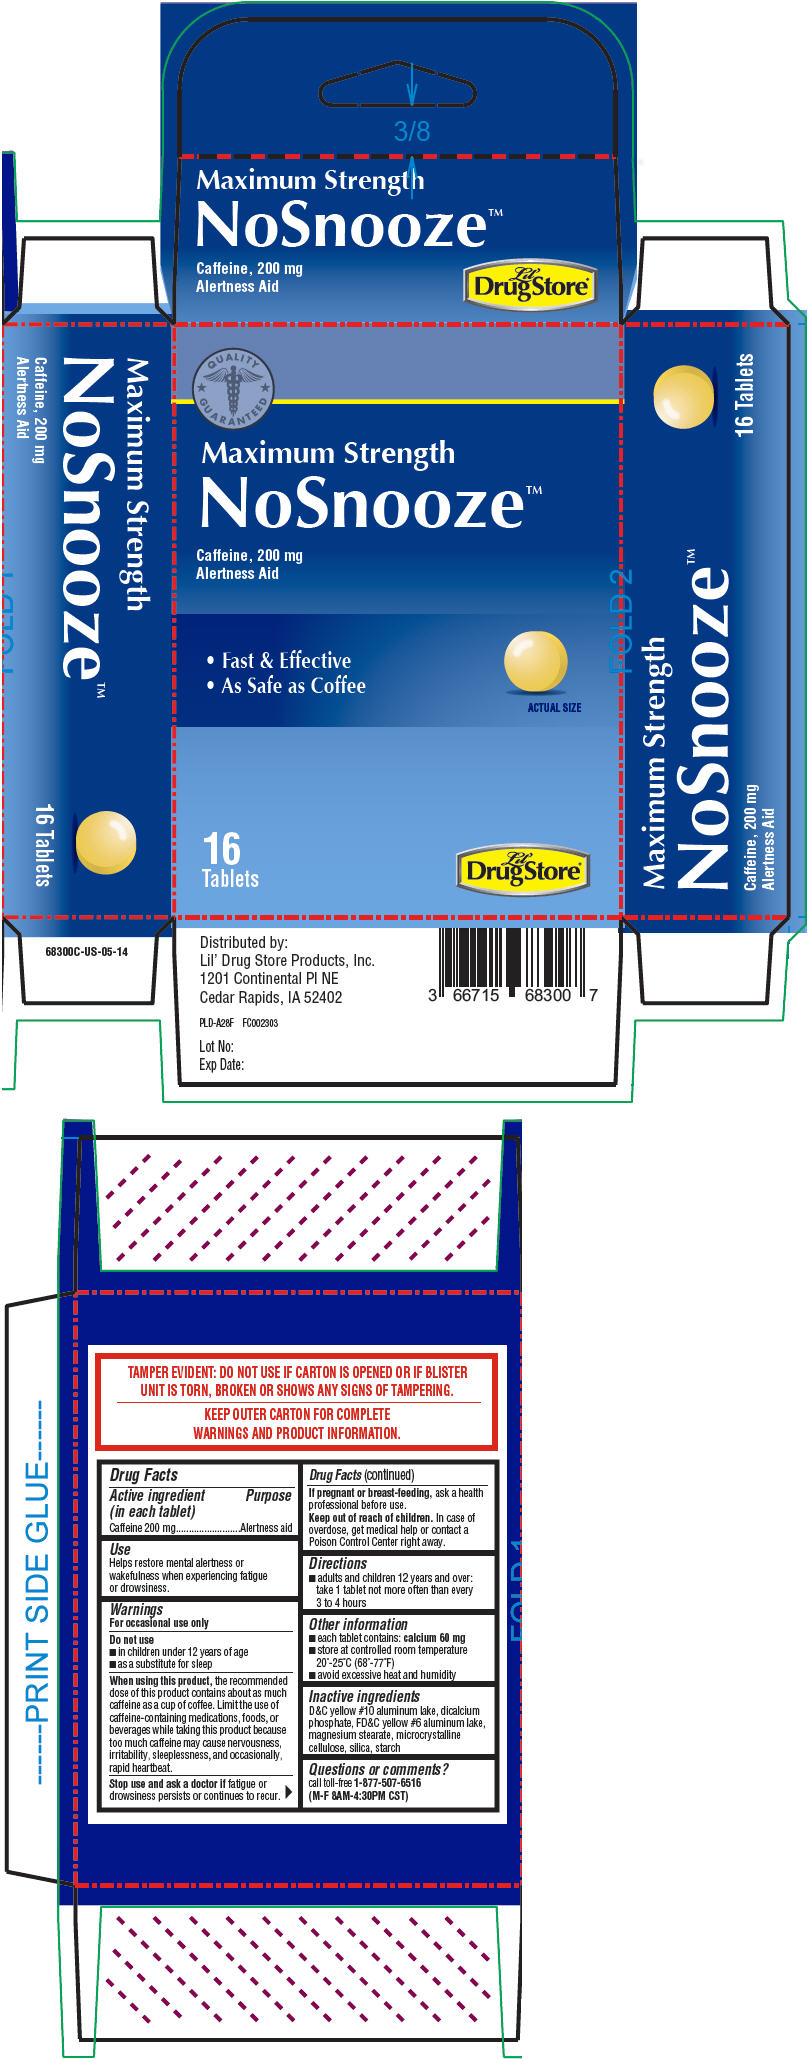 Principal Display Panel - 200 mg Tablet Blister Pack Carton